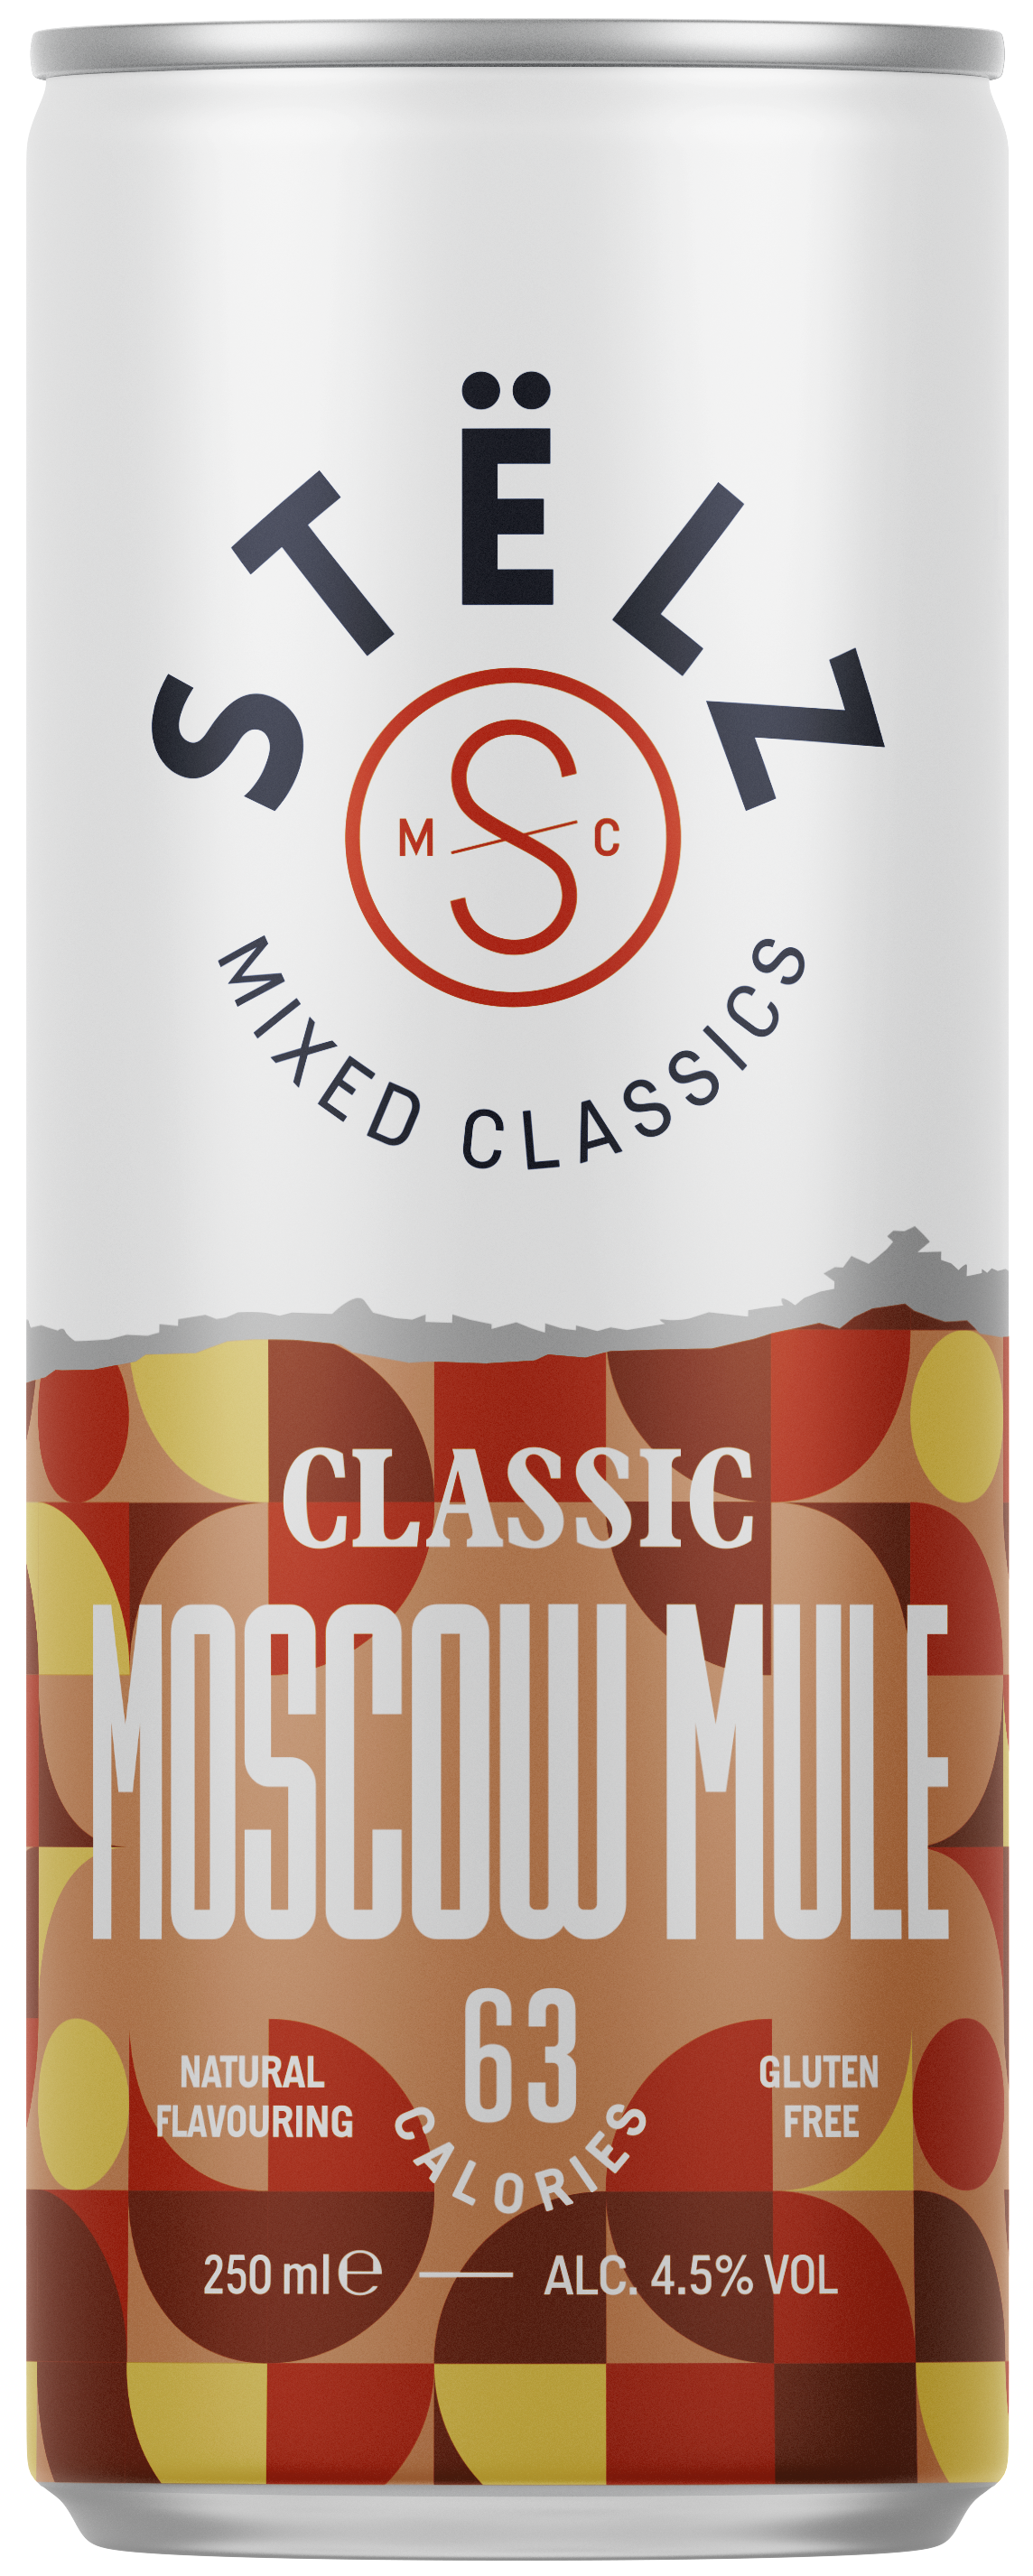 STËLZ Mixed Classics Moscow Mule